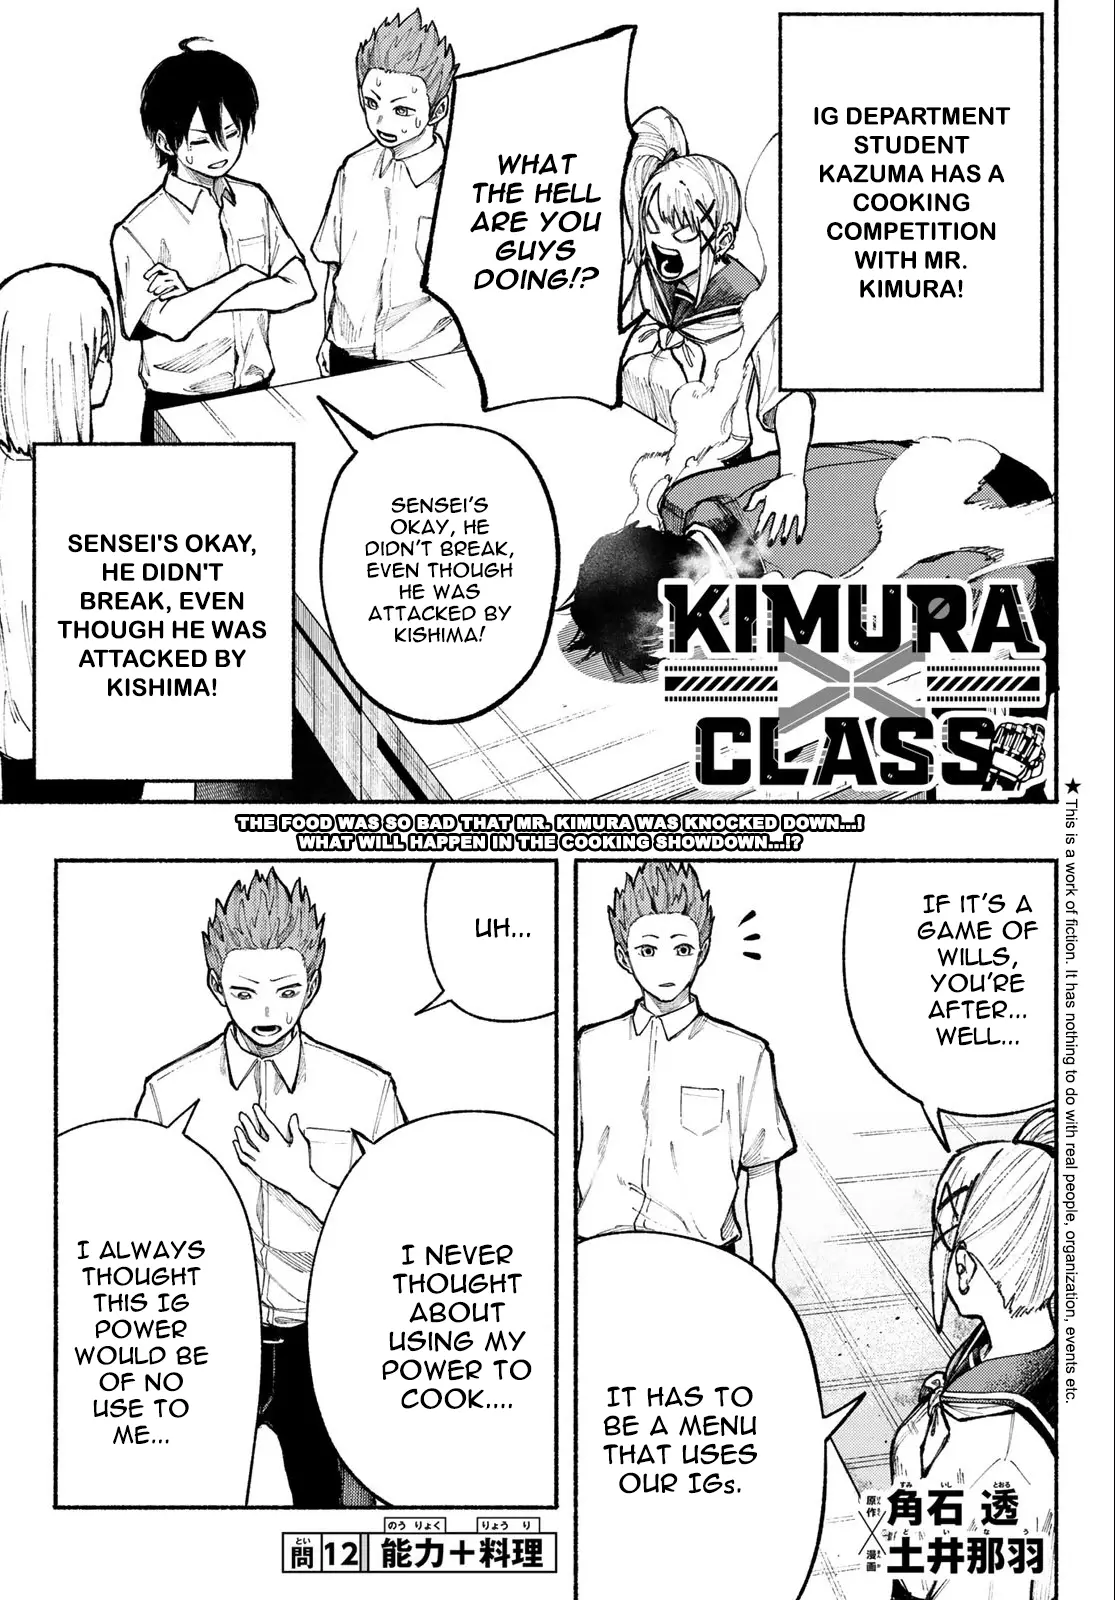 Kimura X Class - 12 page 2-55693830